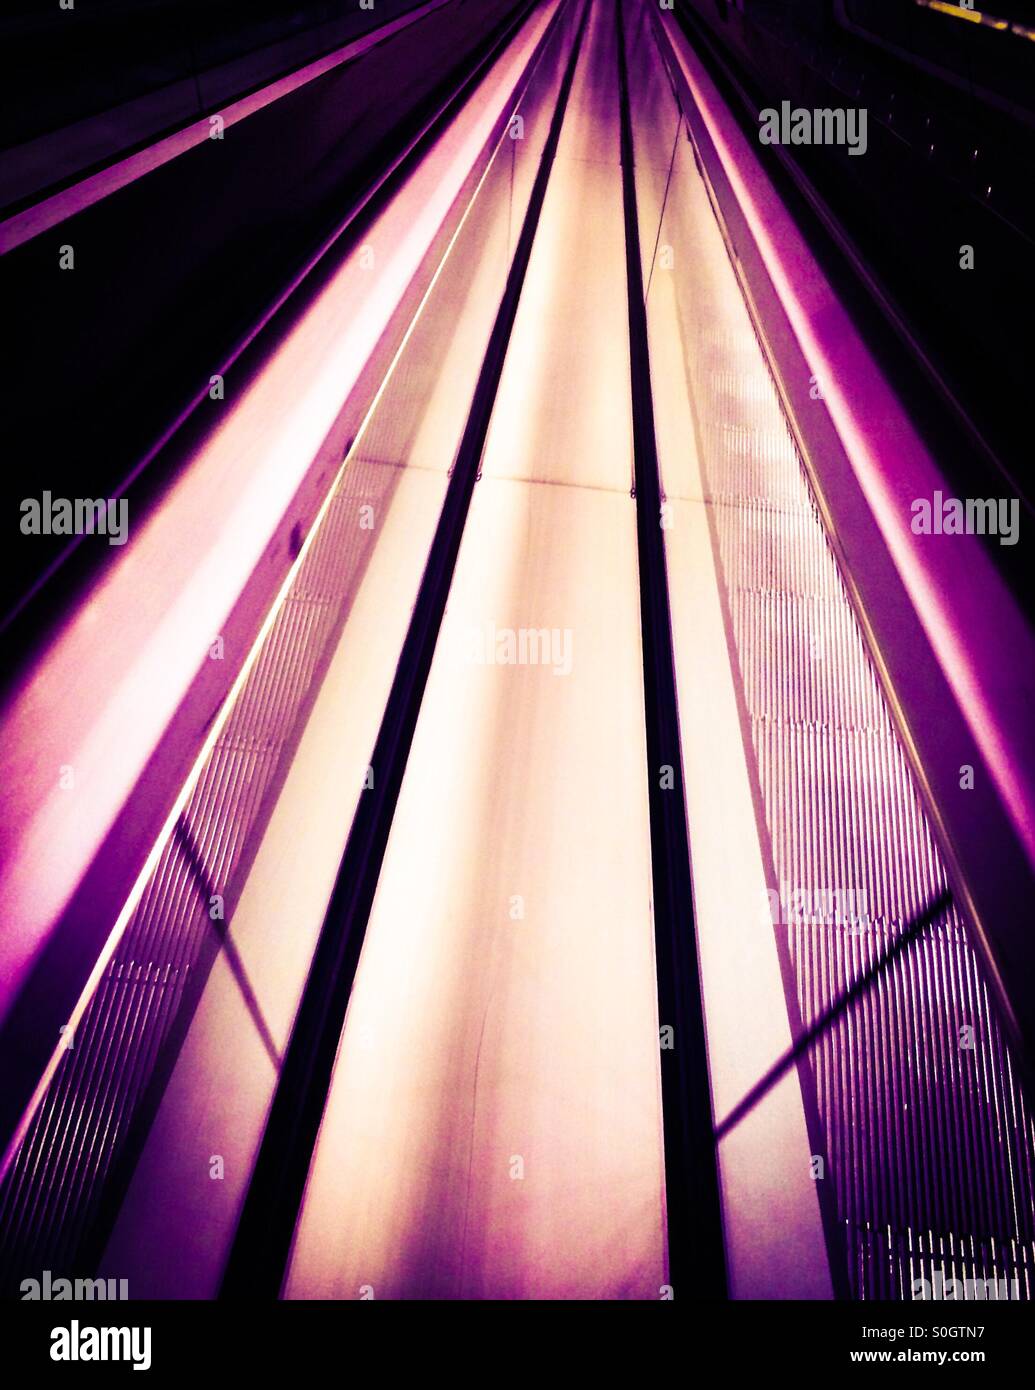 Two escalators illuminating strip lighting. Stock Photo